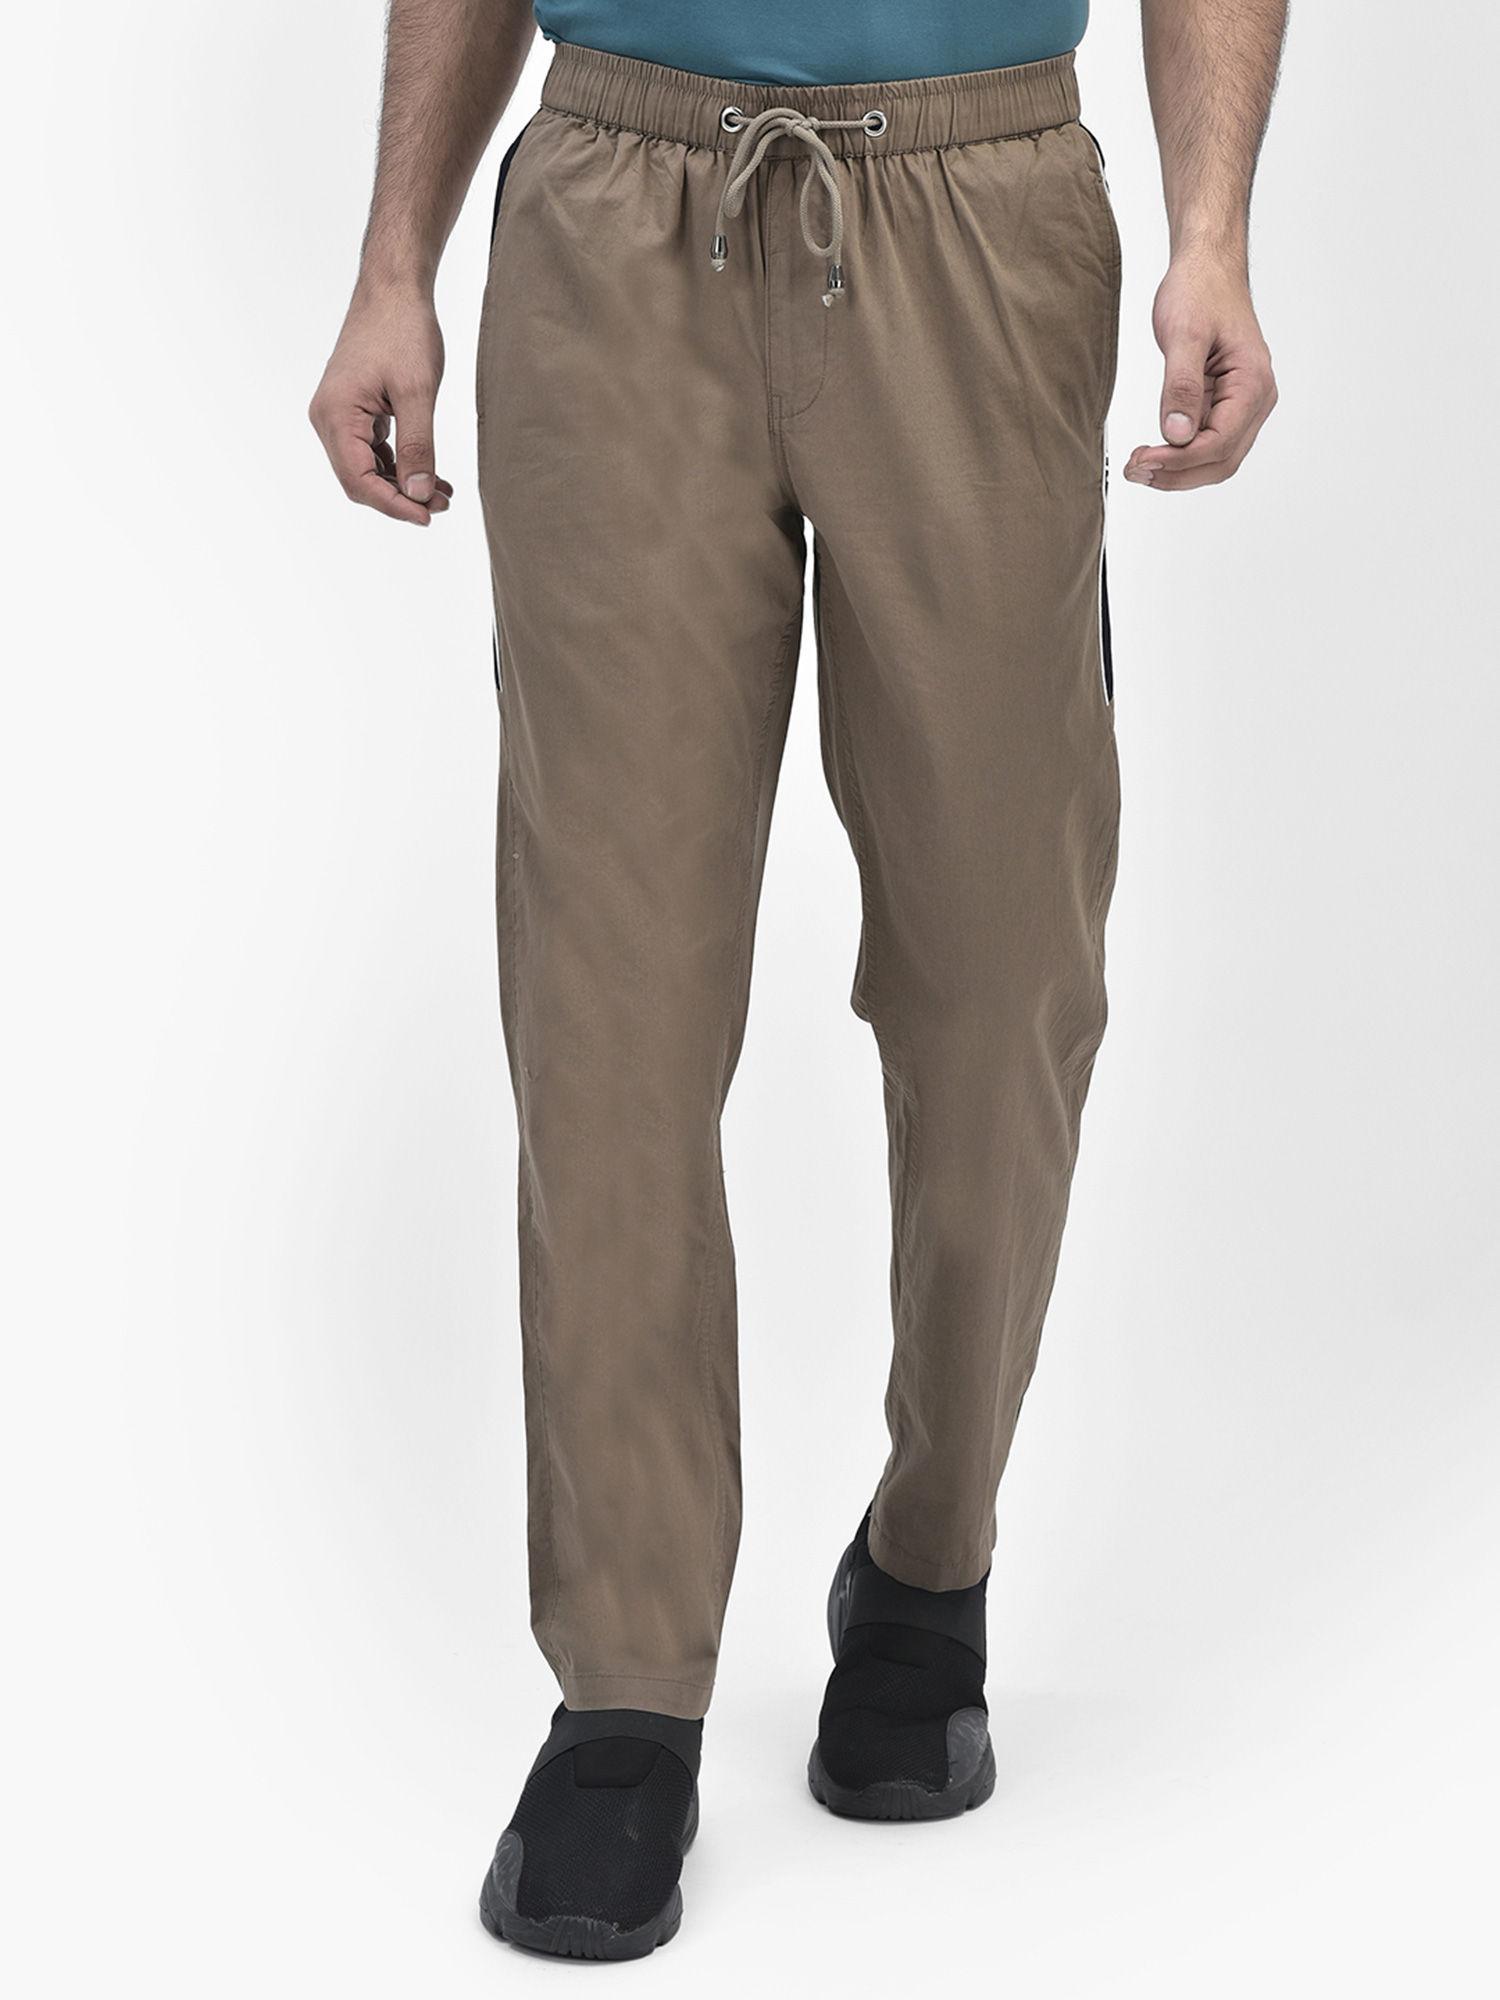 mens-brown-track-pants